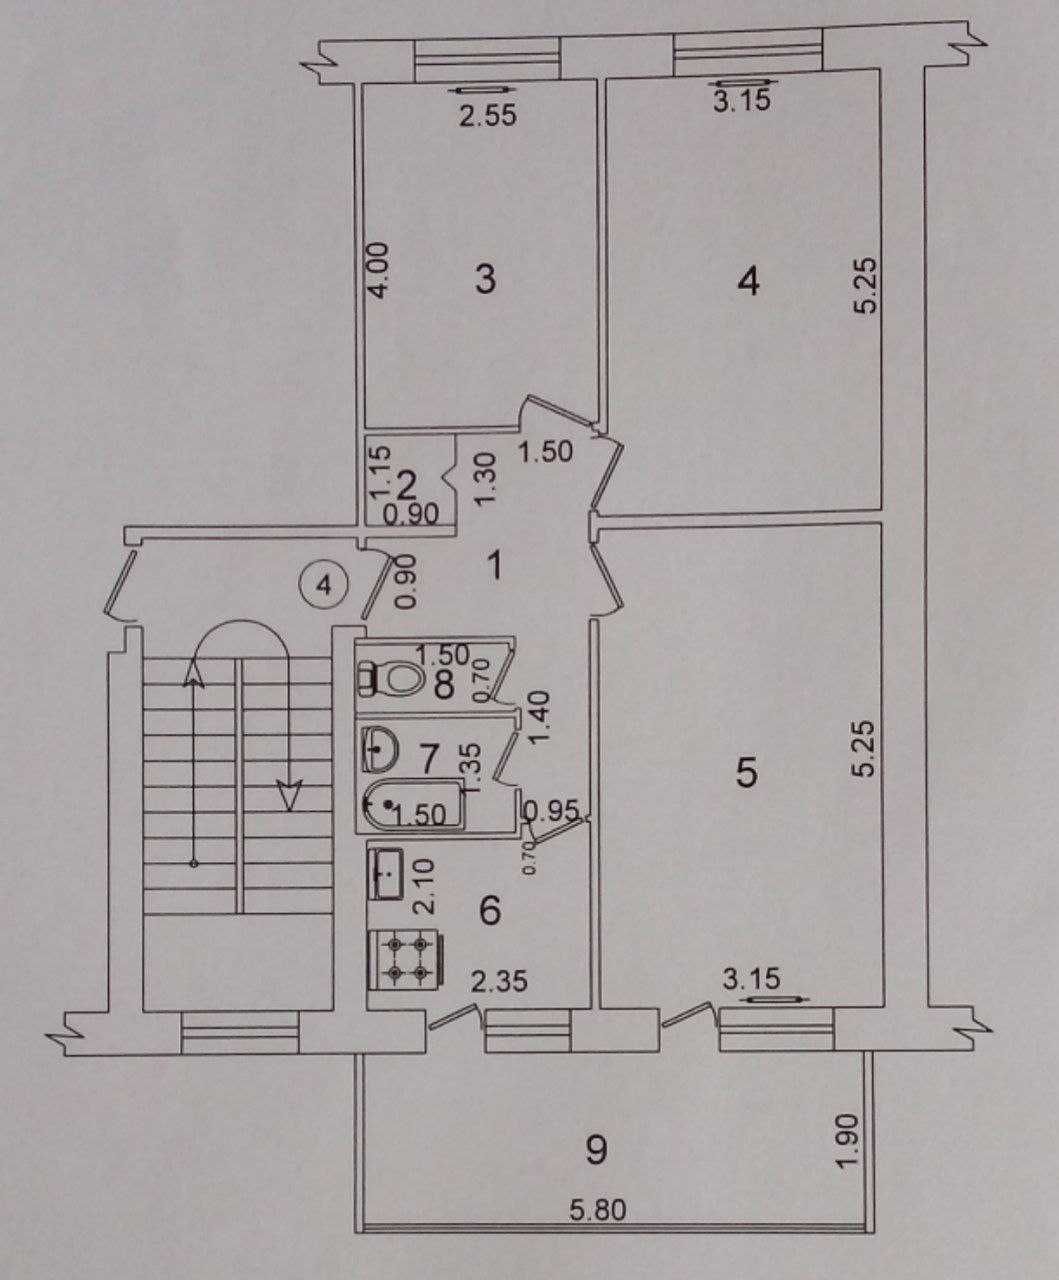 Квартира на Юнусабад 12 - 3 комнатная 69м2 на  2 этаже (NAG)